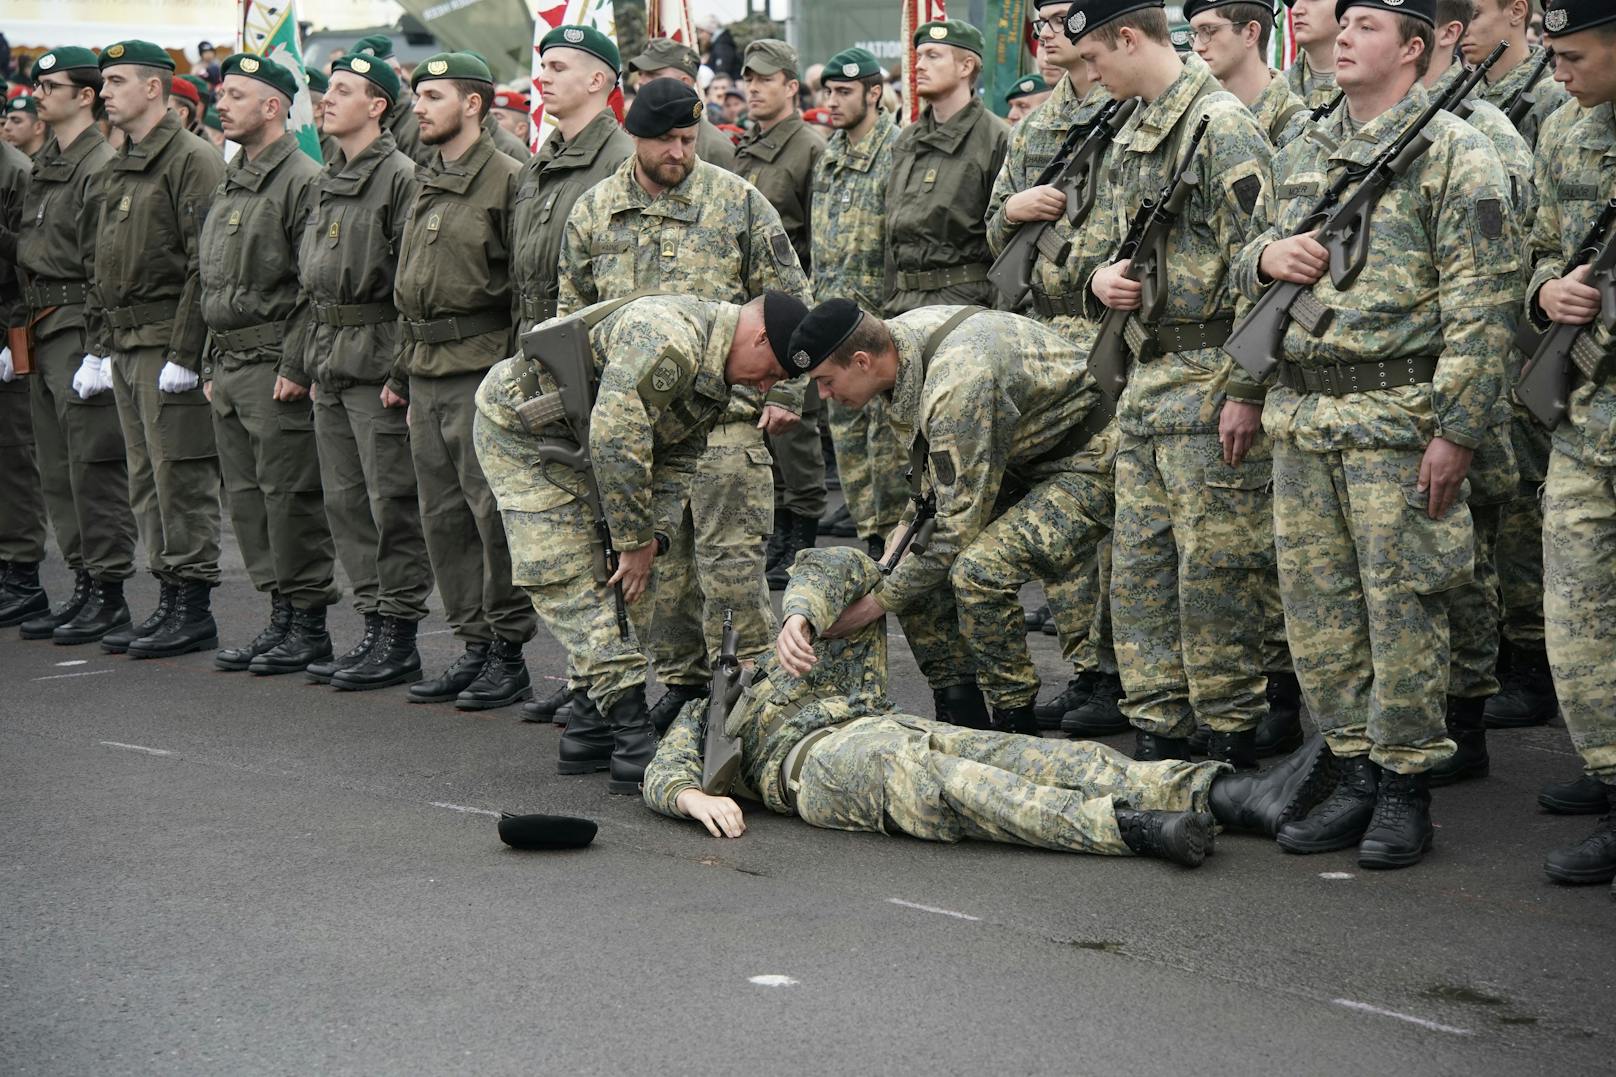 Soldat kollabiert während Kanzlerrede am Heldenplatz